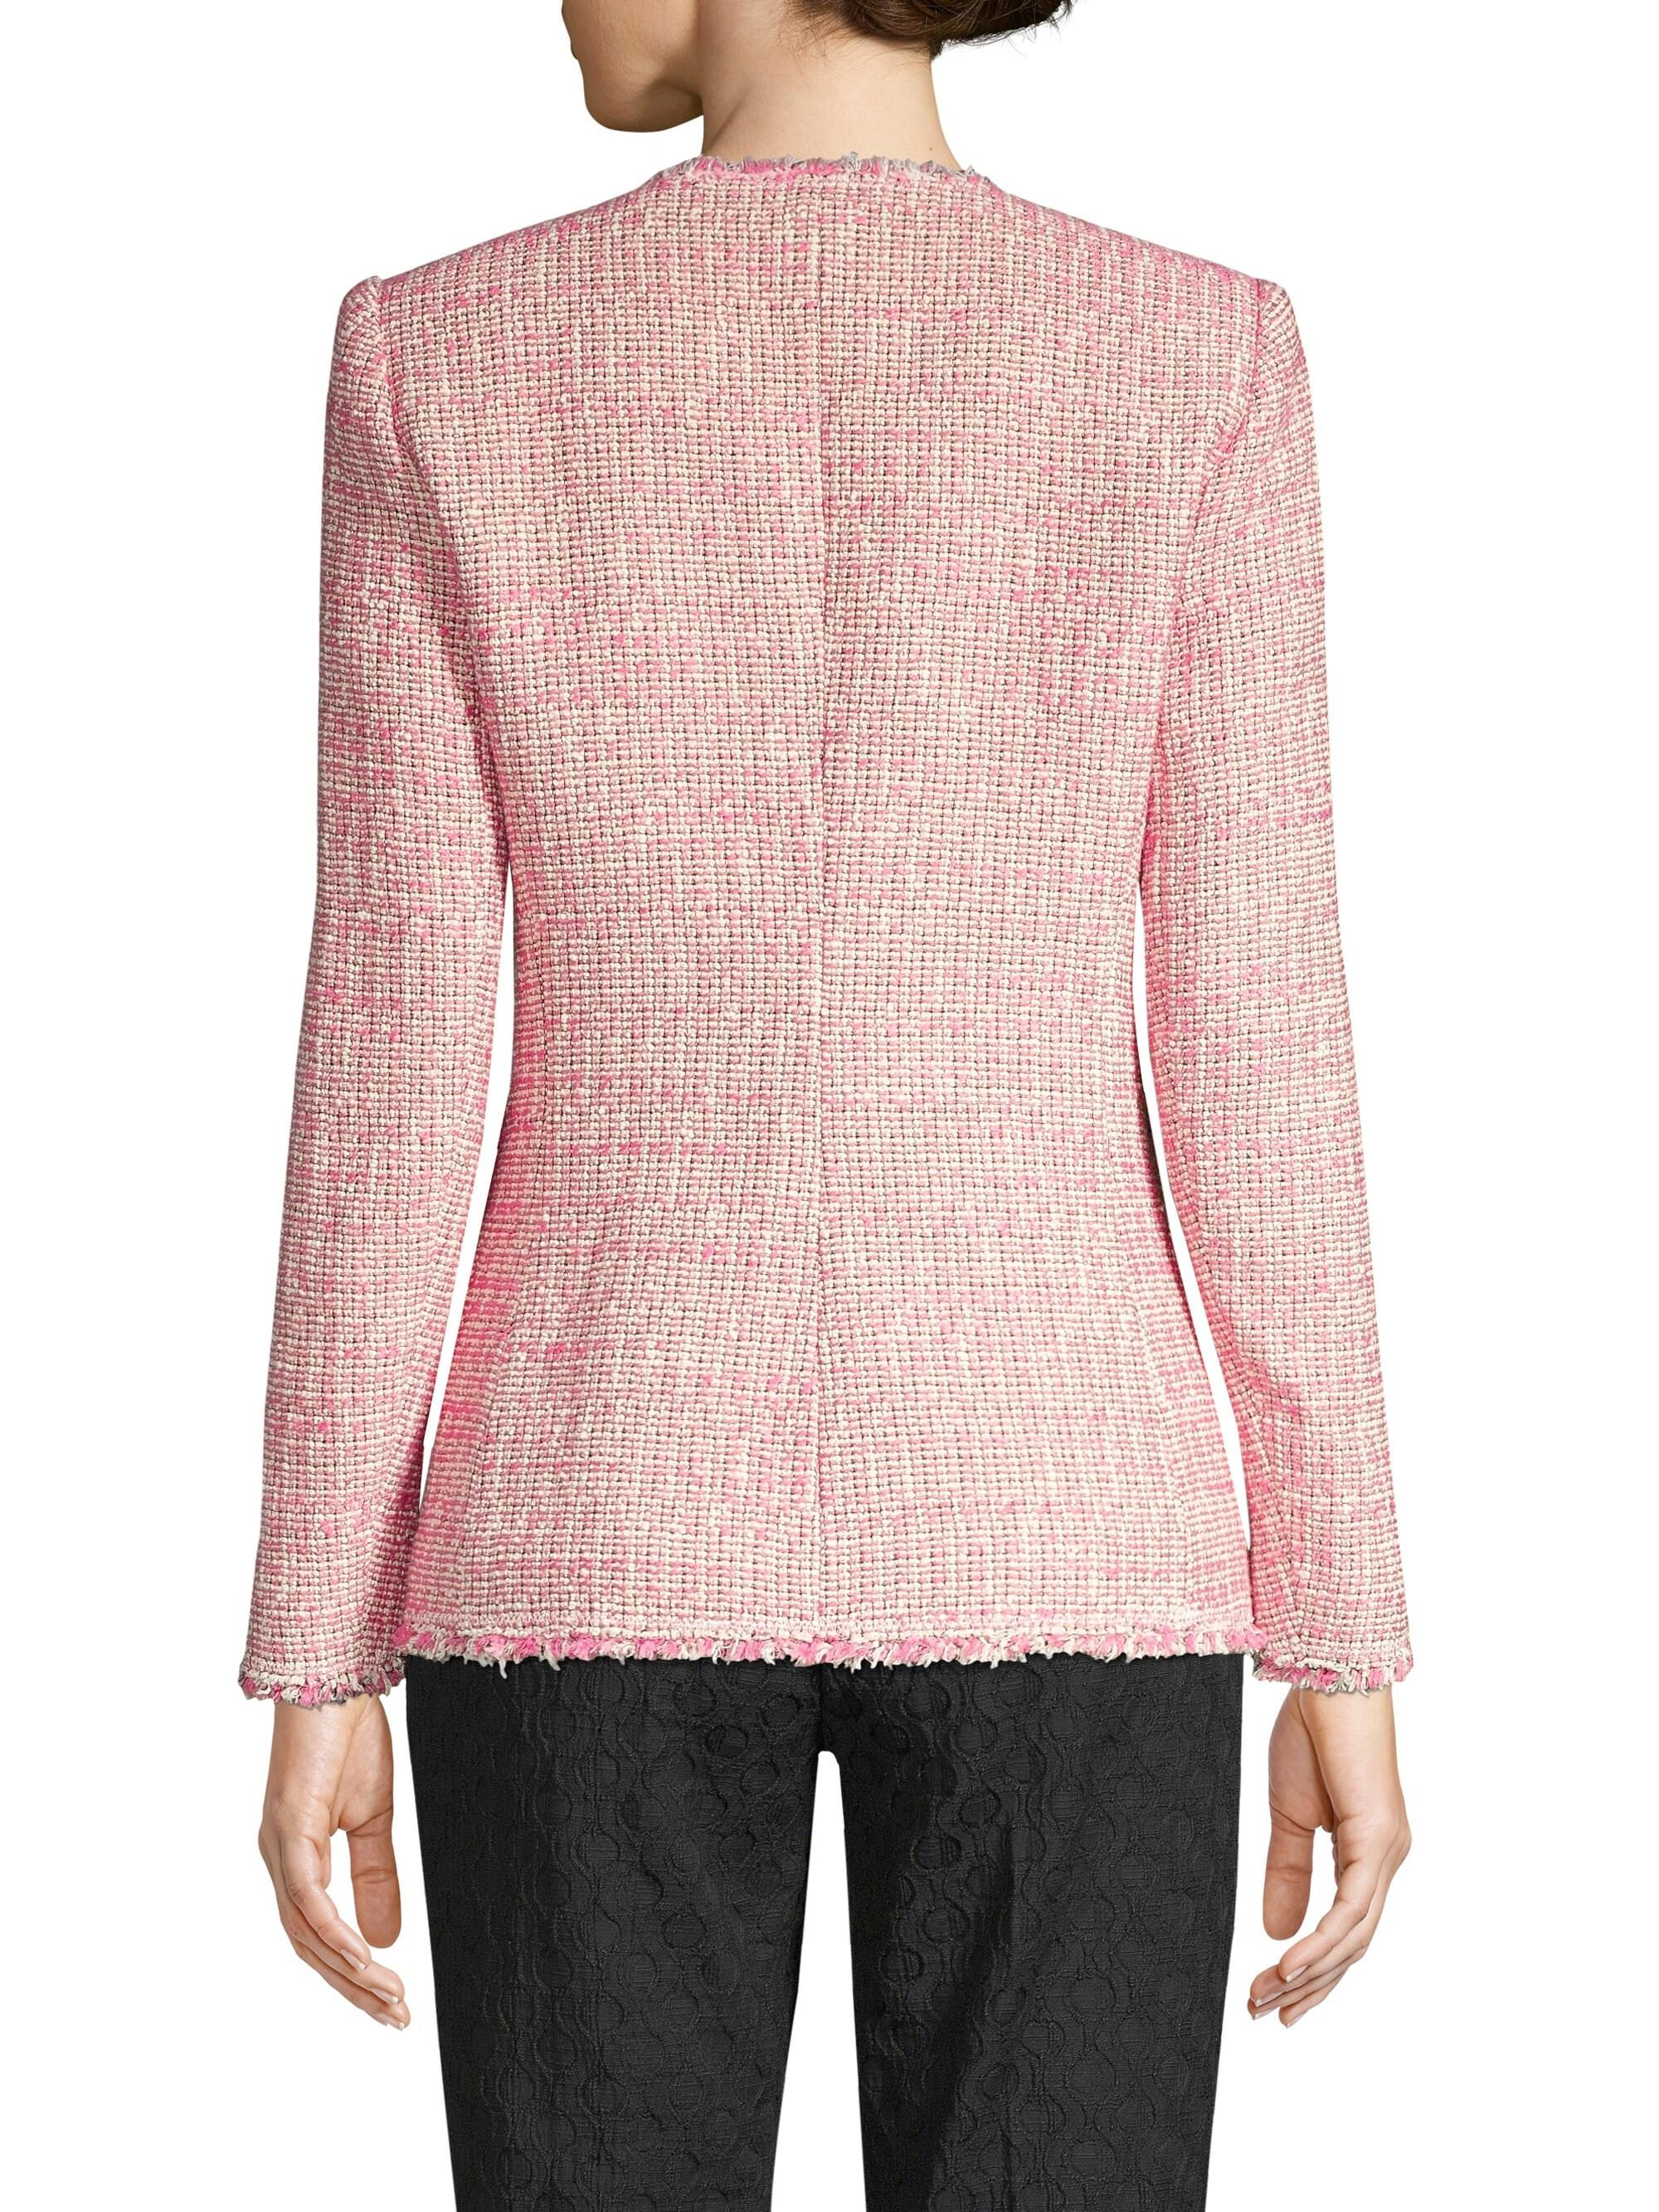 Rebecca Taylor Tonal Fringe Tweed Jacket in Pink - Lyst